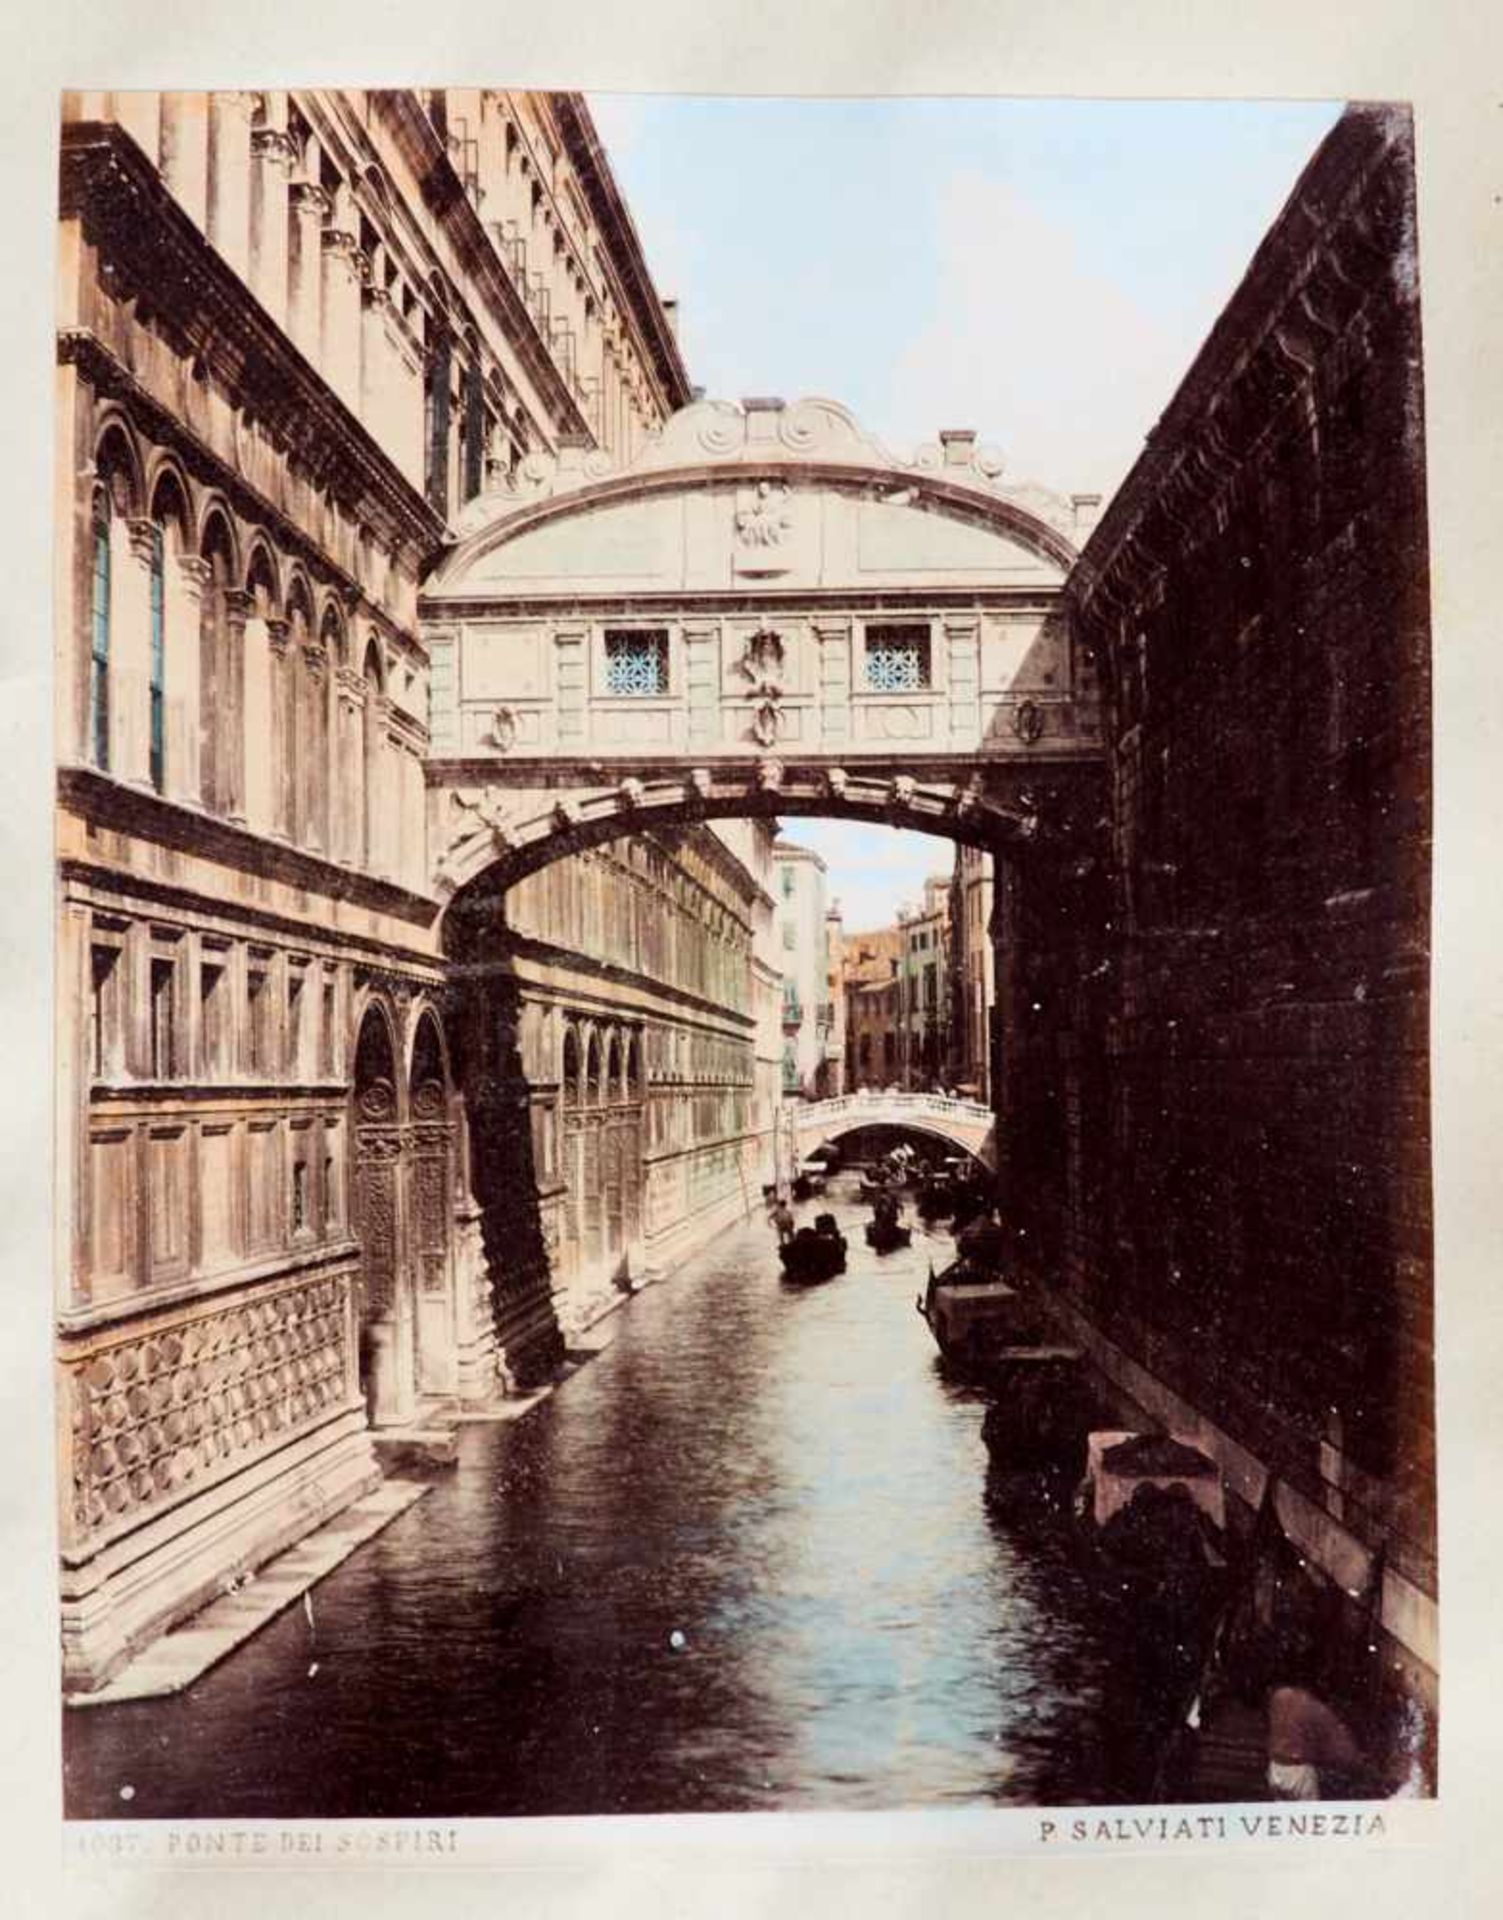 Italien- Album mit 66 mont. Photographien.Um 1890. Ca. 33 x 25 cm. Photographien ca. 24,5 x 19 cm. - Bild 5 aus 5